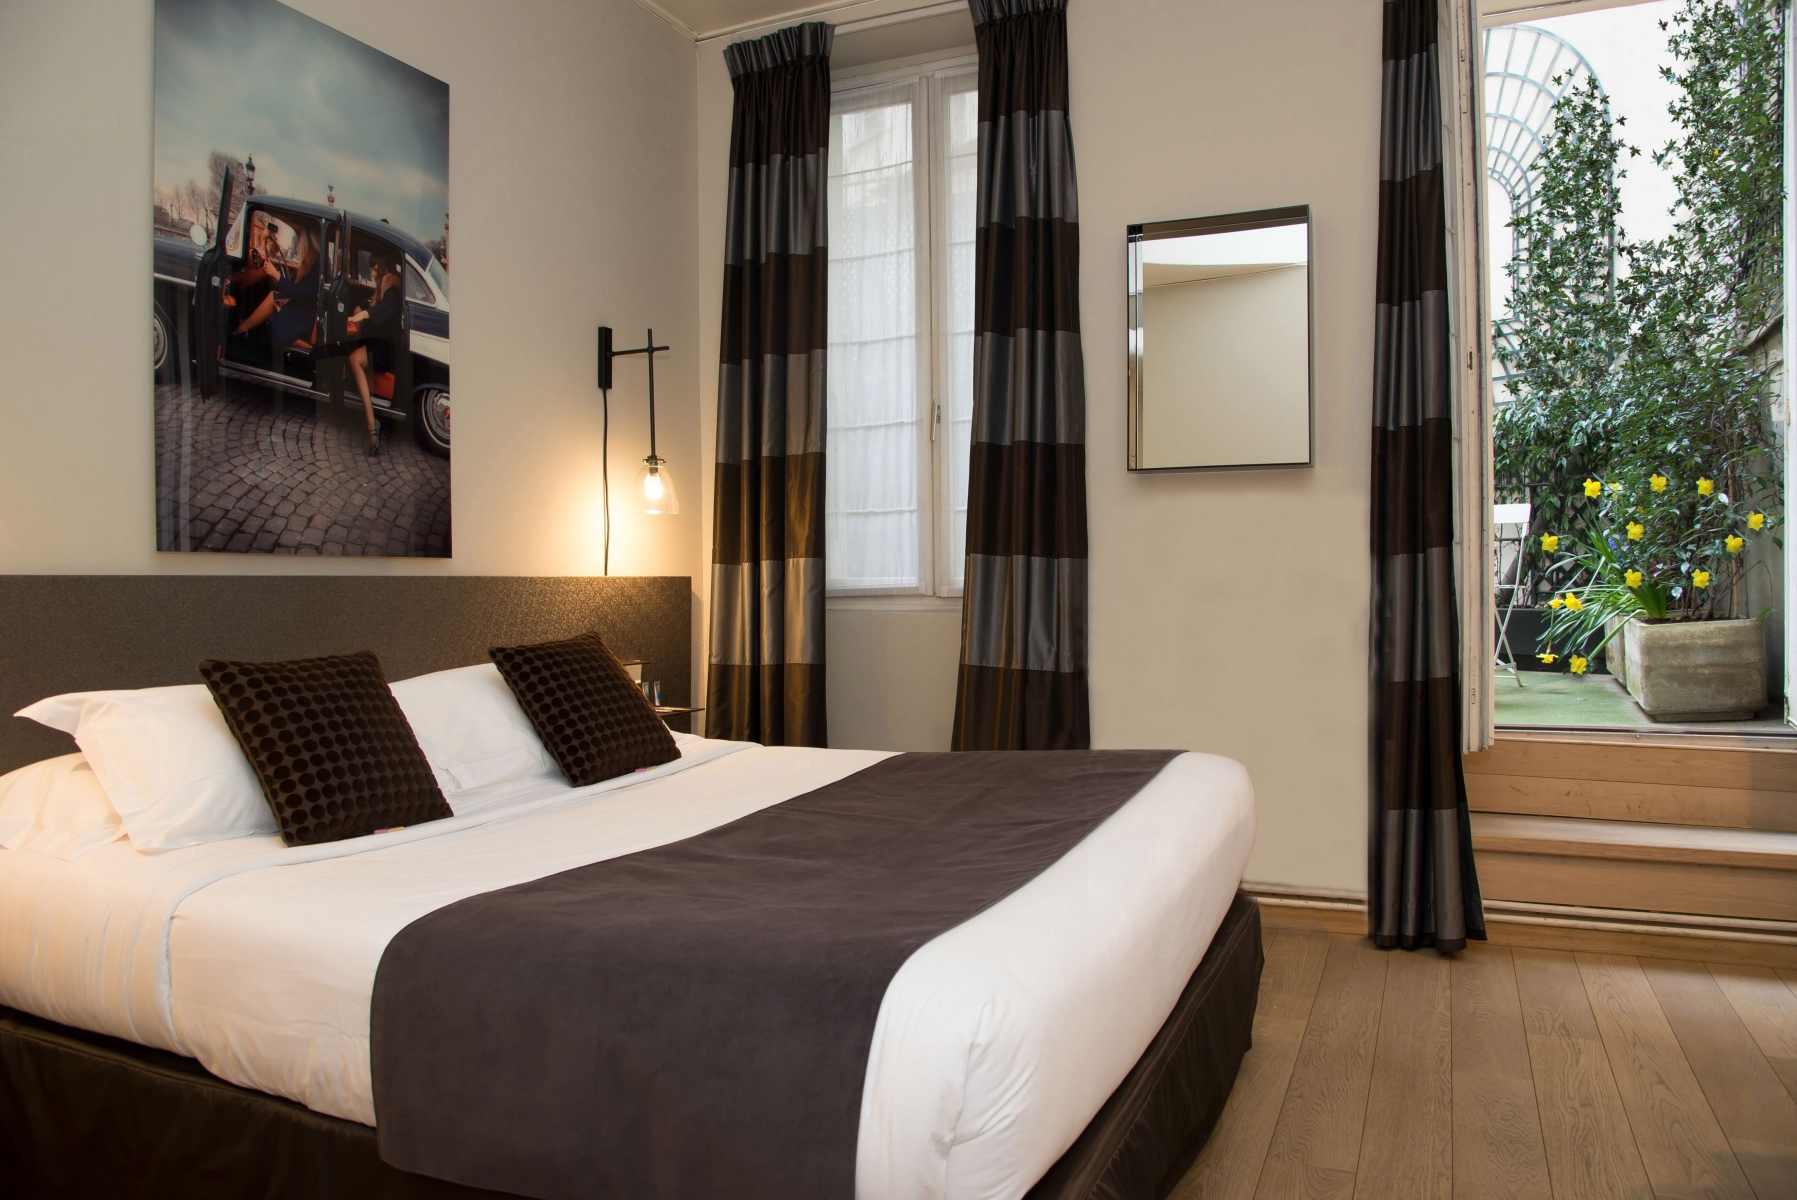 Hotel Tilsitt Etoile <br/>135.00 ew <br/> <a href='http://vakantieoplossing.nl/outpage/?id=985c61b8d6a5861f4719170dcd16307a' target='_blank'>View Details</a>